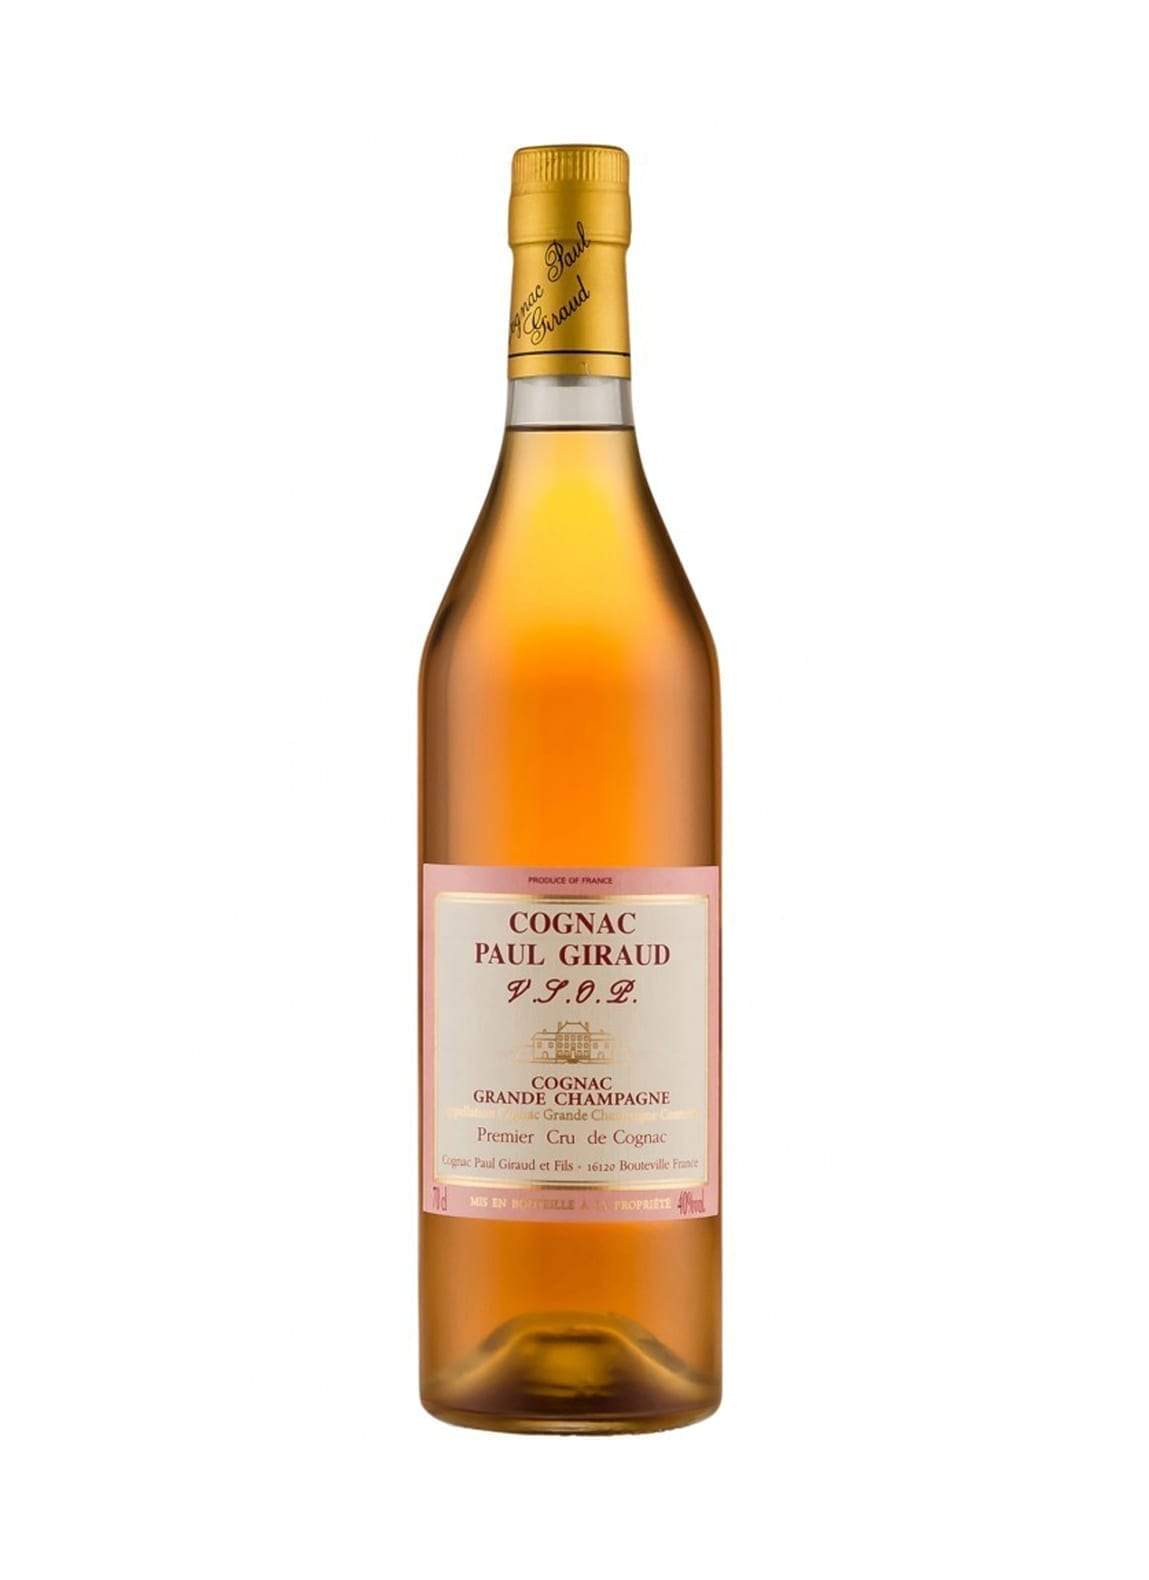 Paul Giraud Cognac VSOP 8 years Grande Champagne 40% 700ml | Brandy | Shop online at Spirits of France